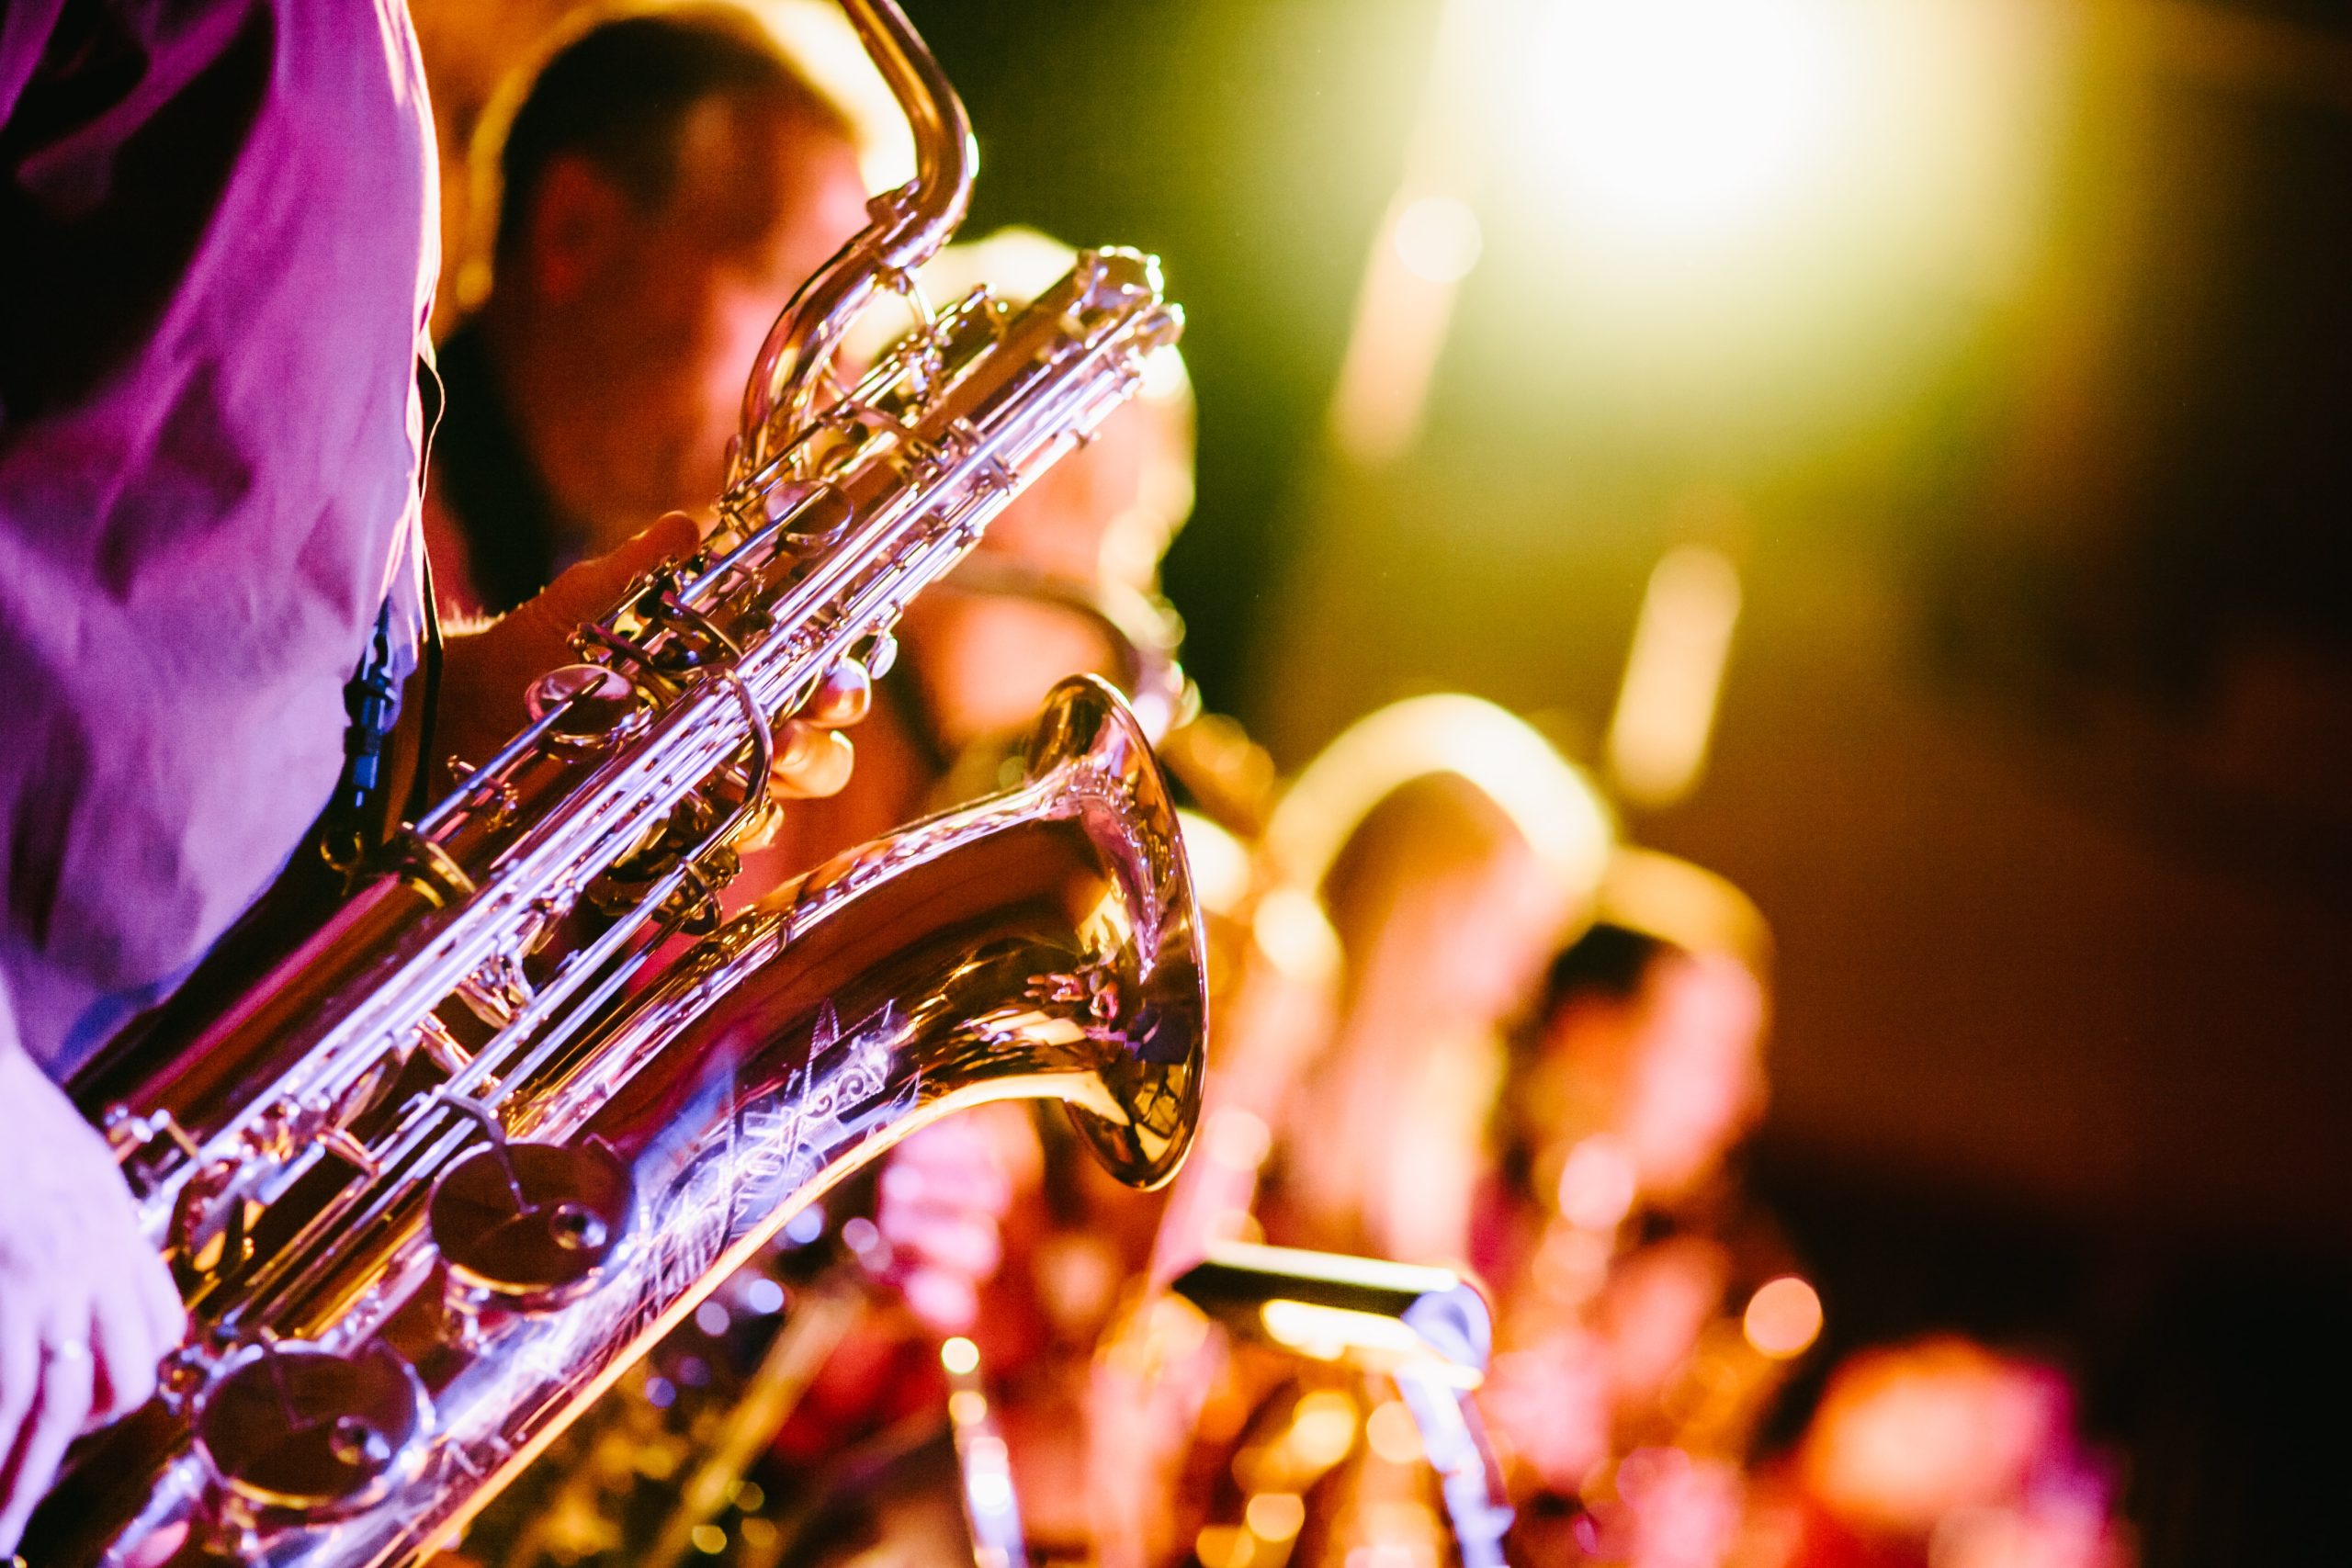 Closeup of saxophone at a concert